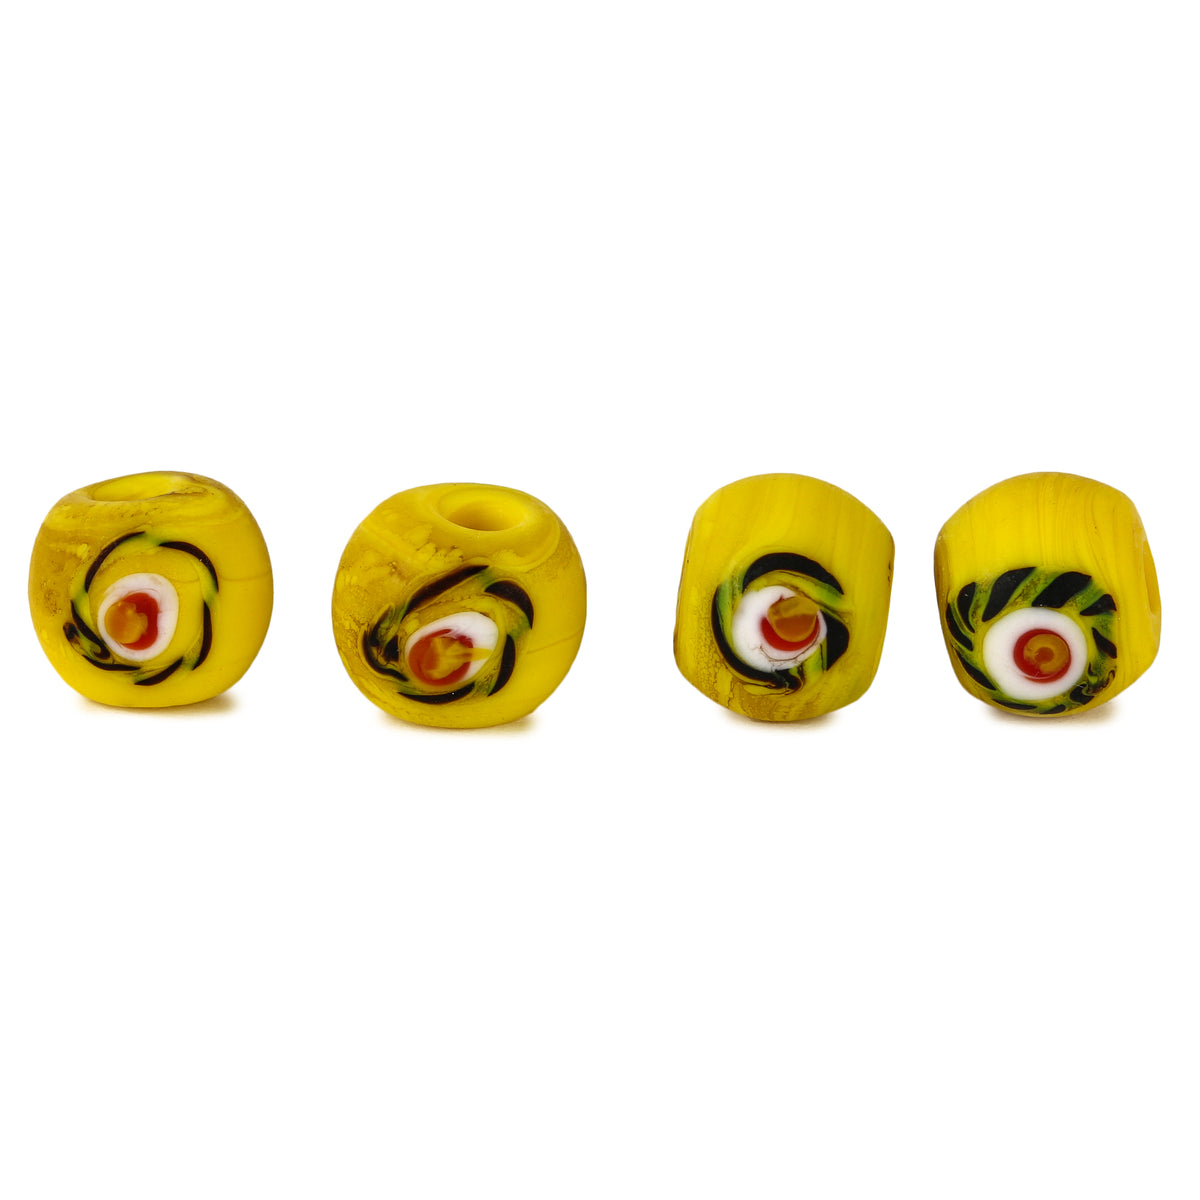 Yellow glass bead with eye decor, Håringe